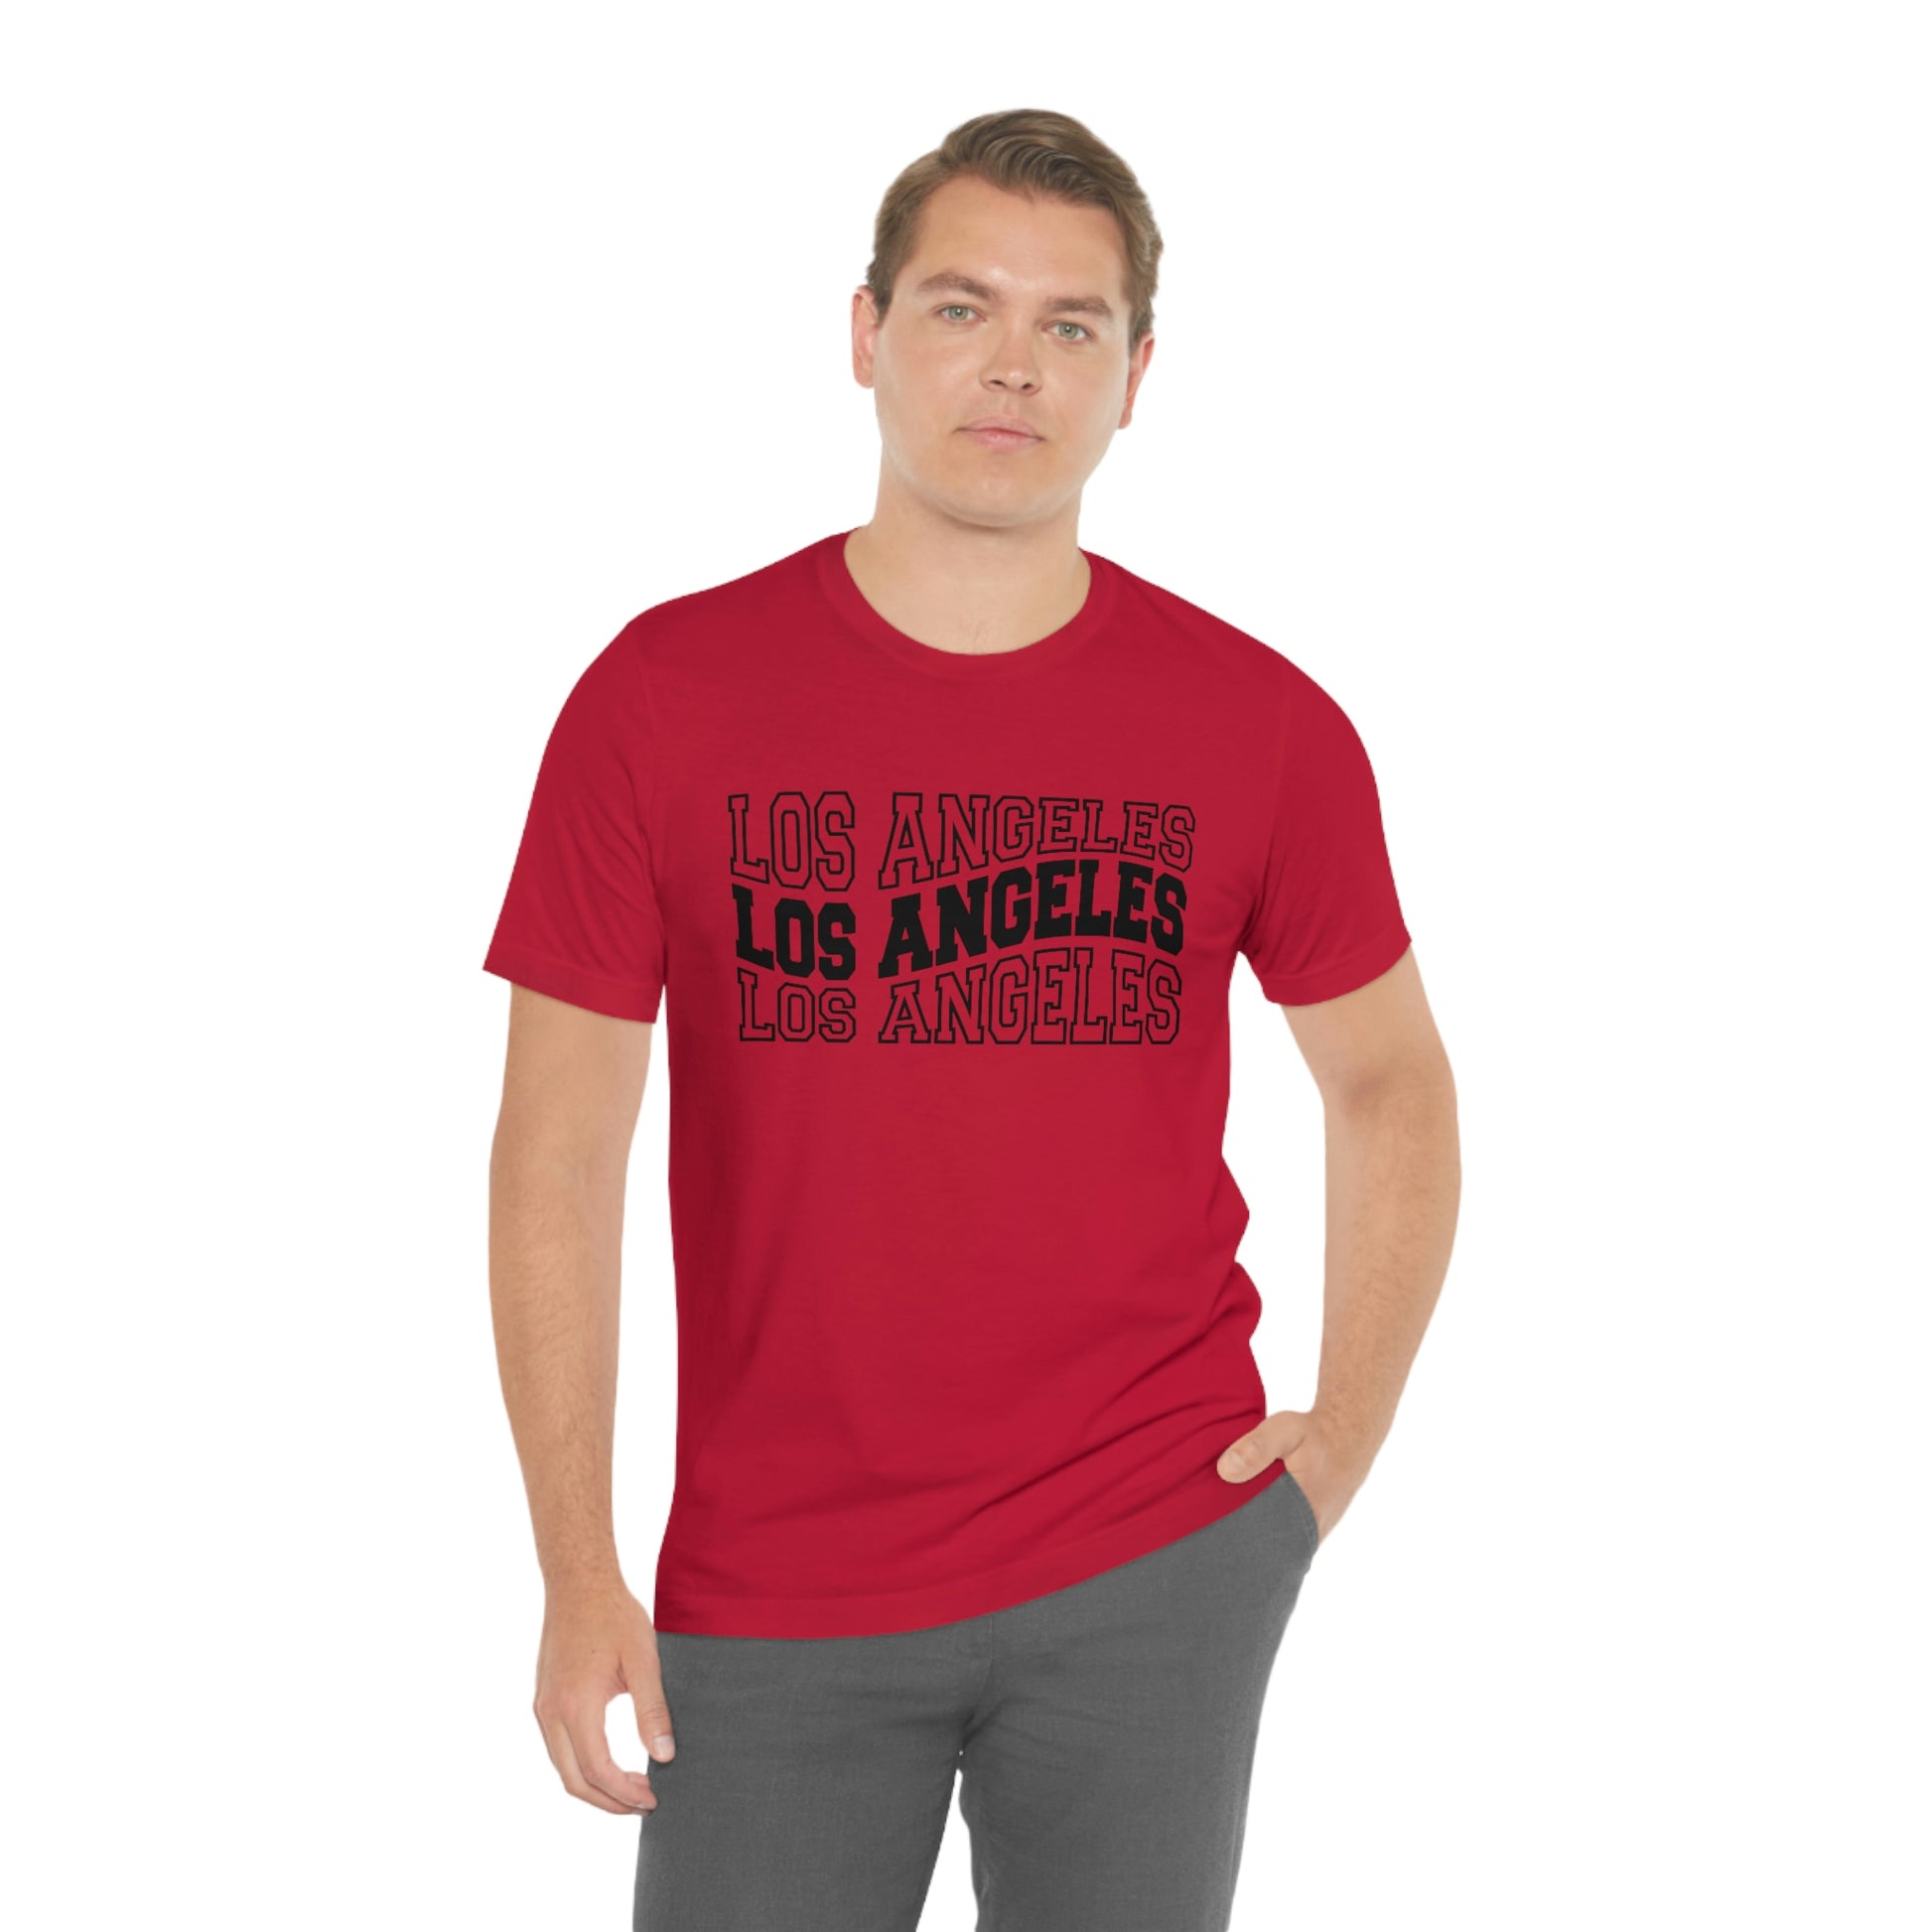 Los Angeles Varsity Letters Wavy Unisex Jersey Short Sleeve Tee Tshirt T-shirt